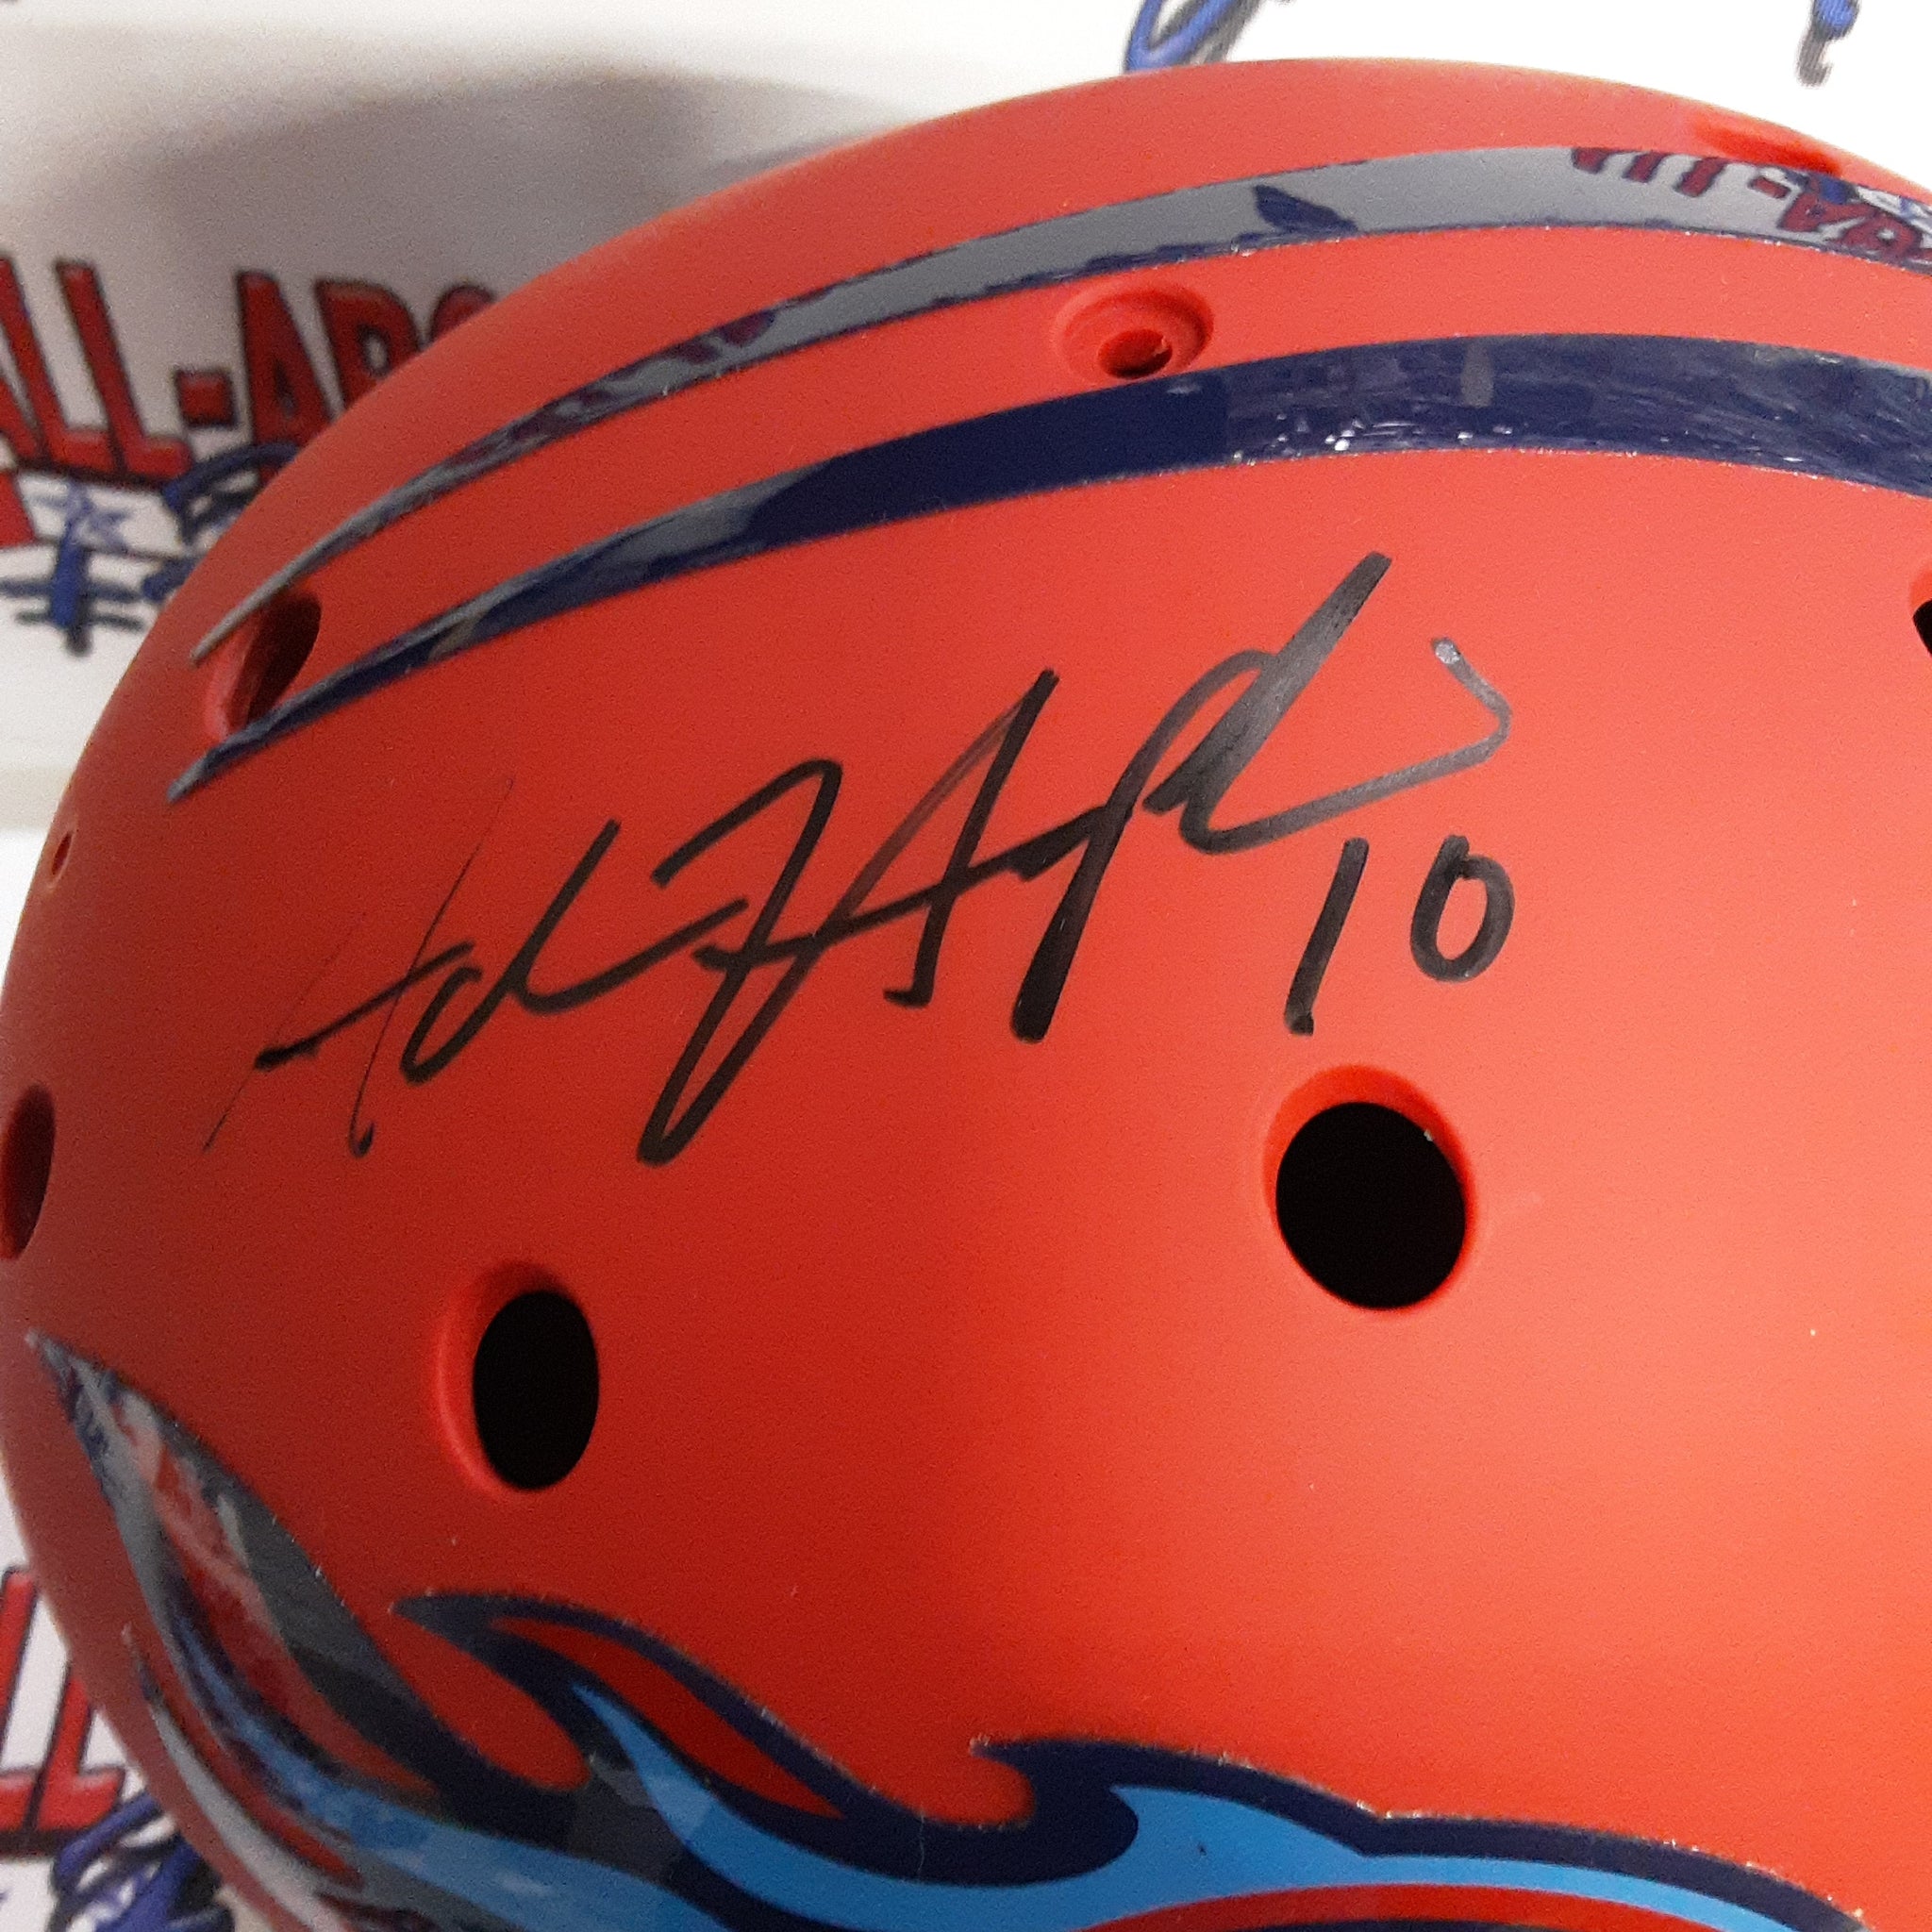 Adam Humphries Replica Signed Autographed Full-size Replica Helmet JSA.